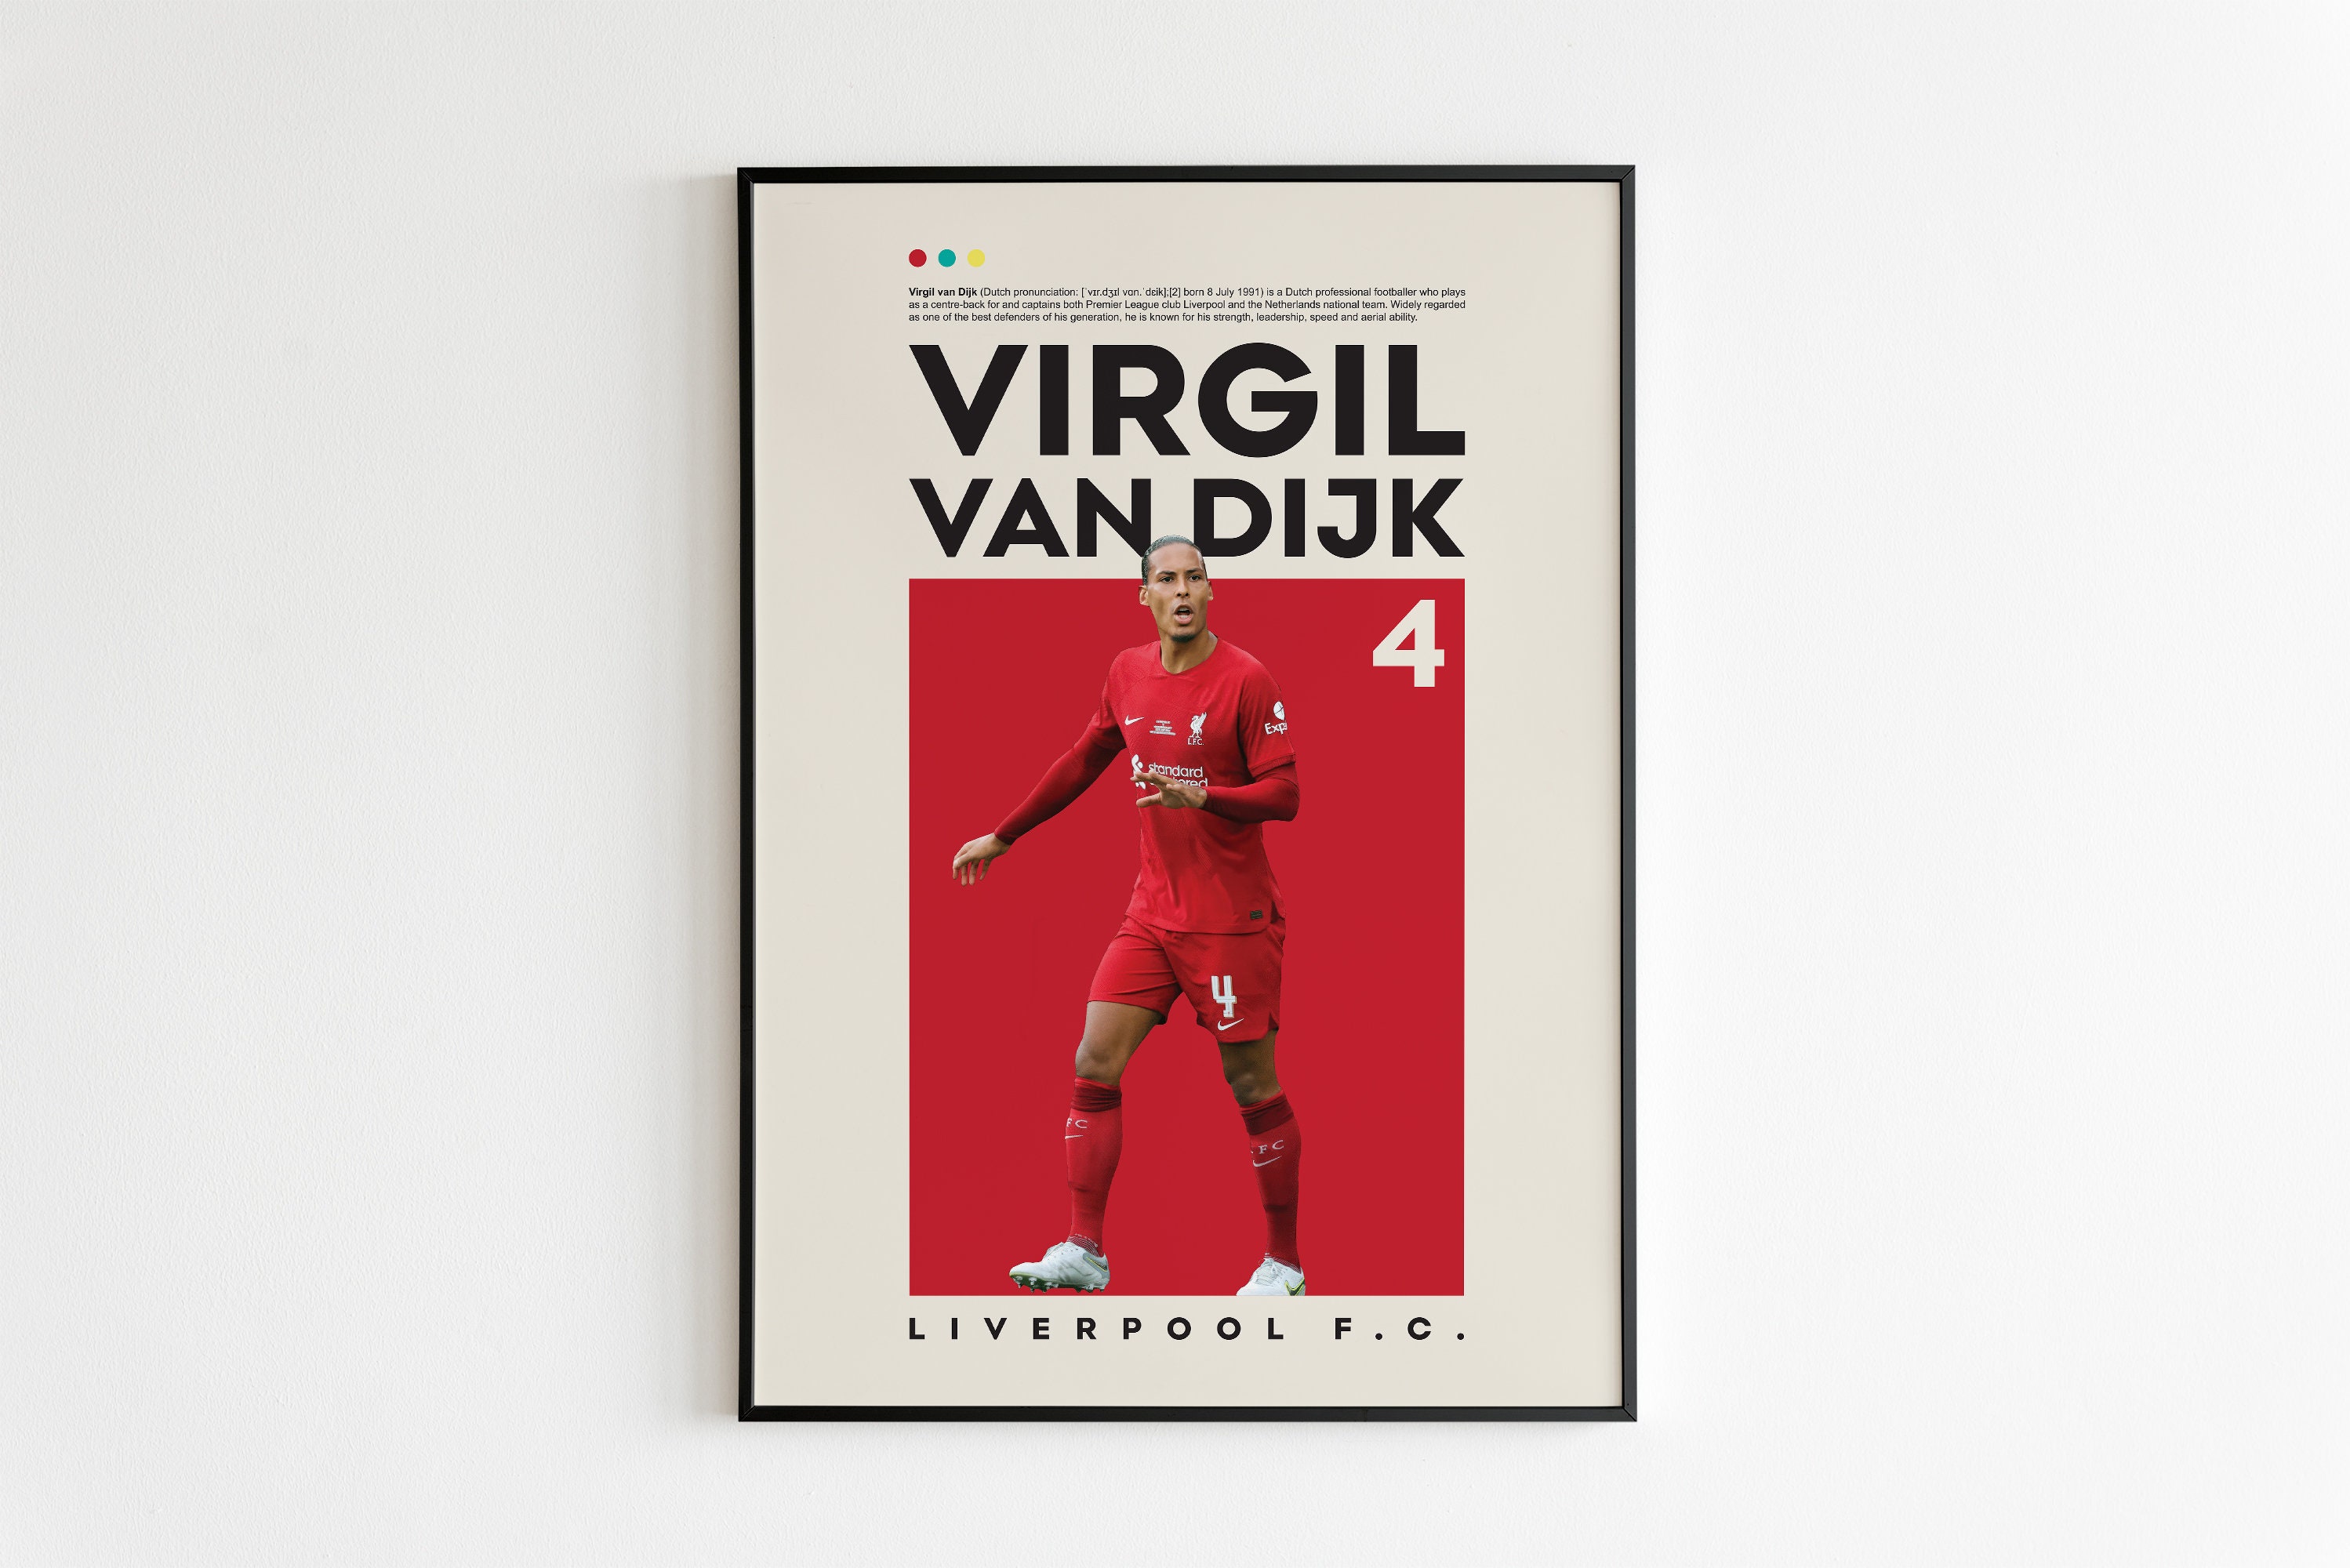 Discover Virgil van Dijk Poster, Liverpool Poster, Virgil van Dijk Print Art, Office Wall Art, Bedroom Art, Gift Poster, Dutch Footballer